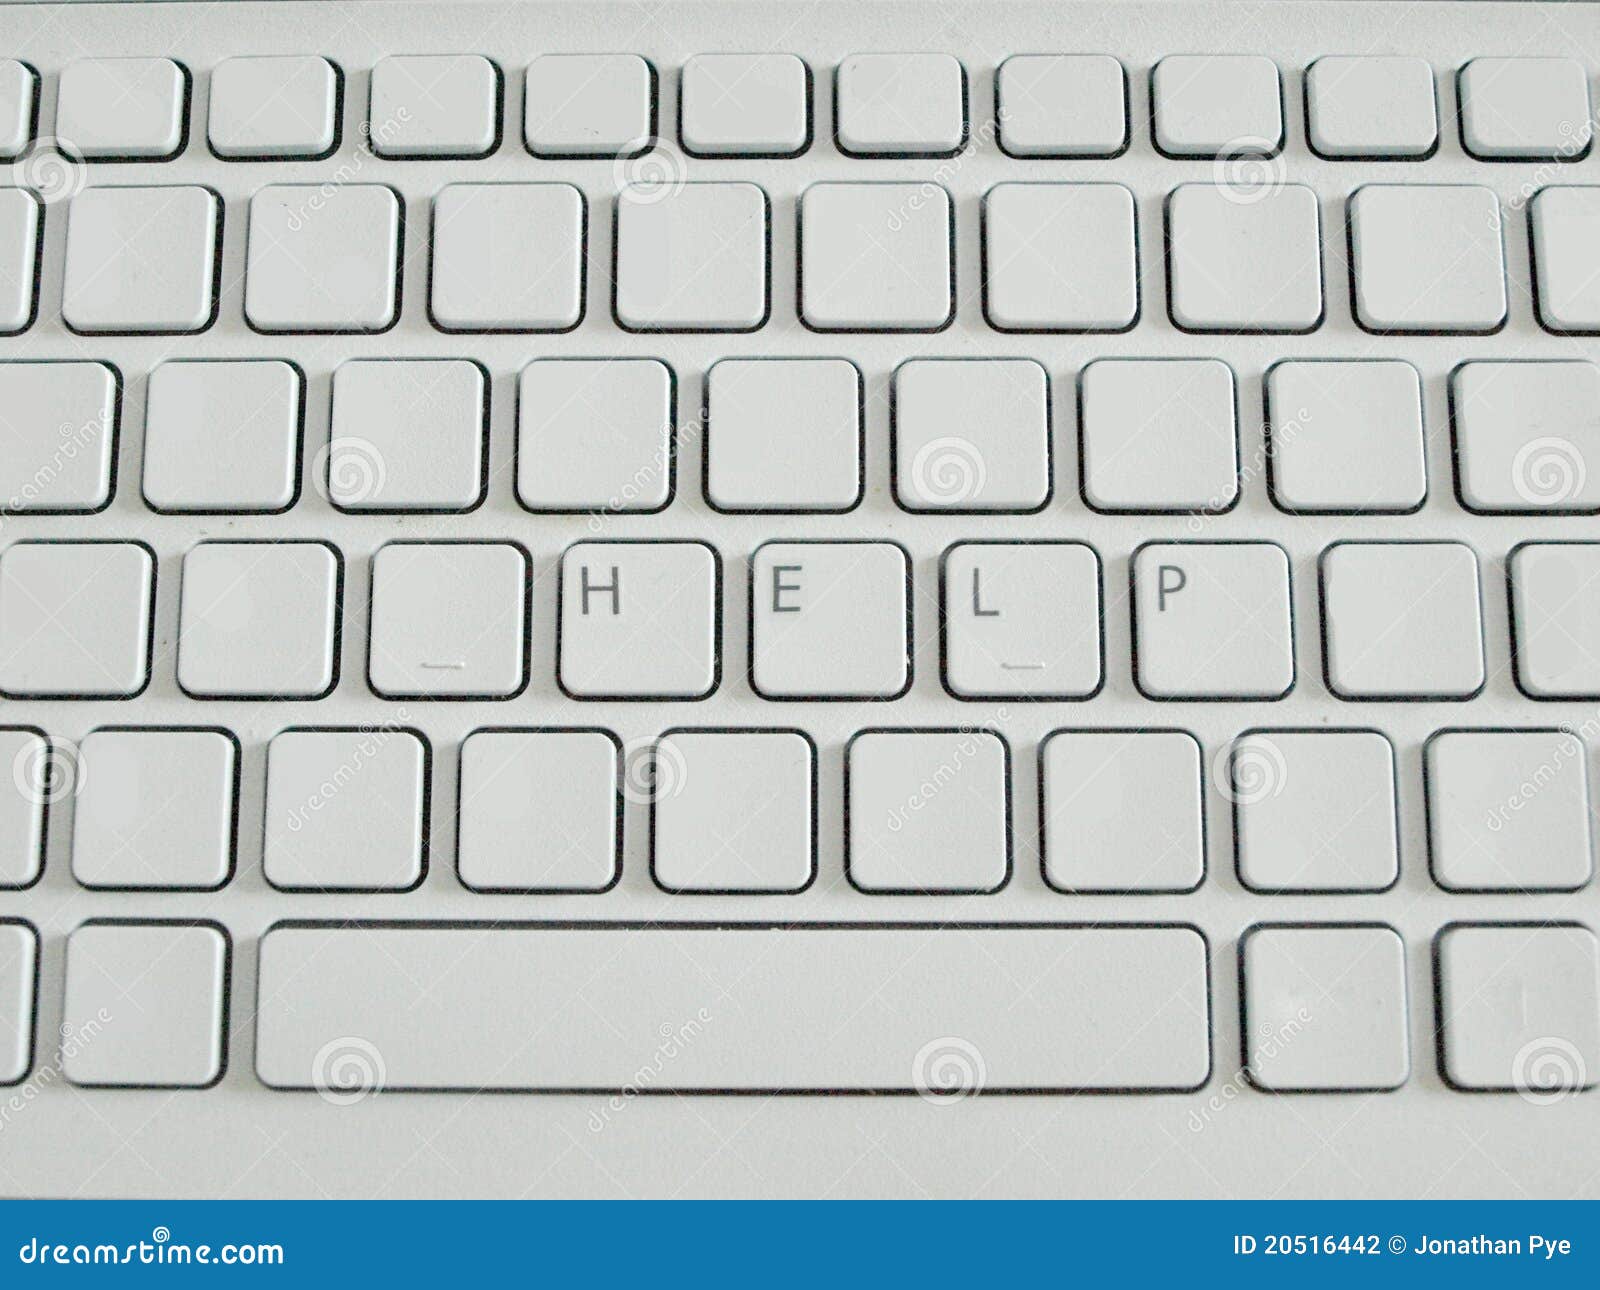 Stock Photography: Word help on blank keyboard